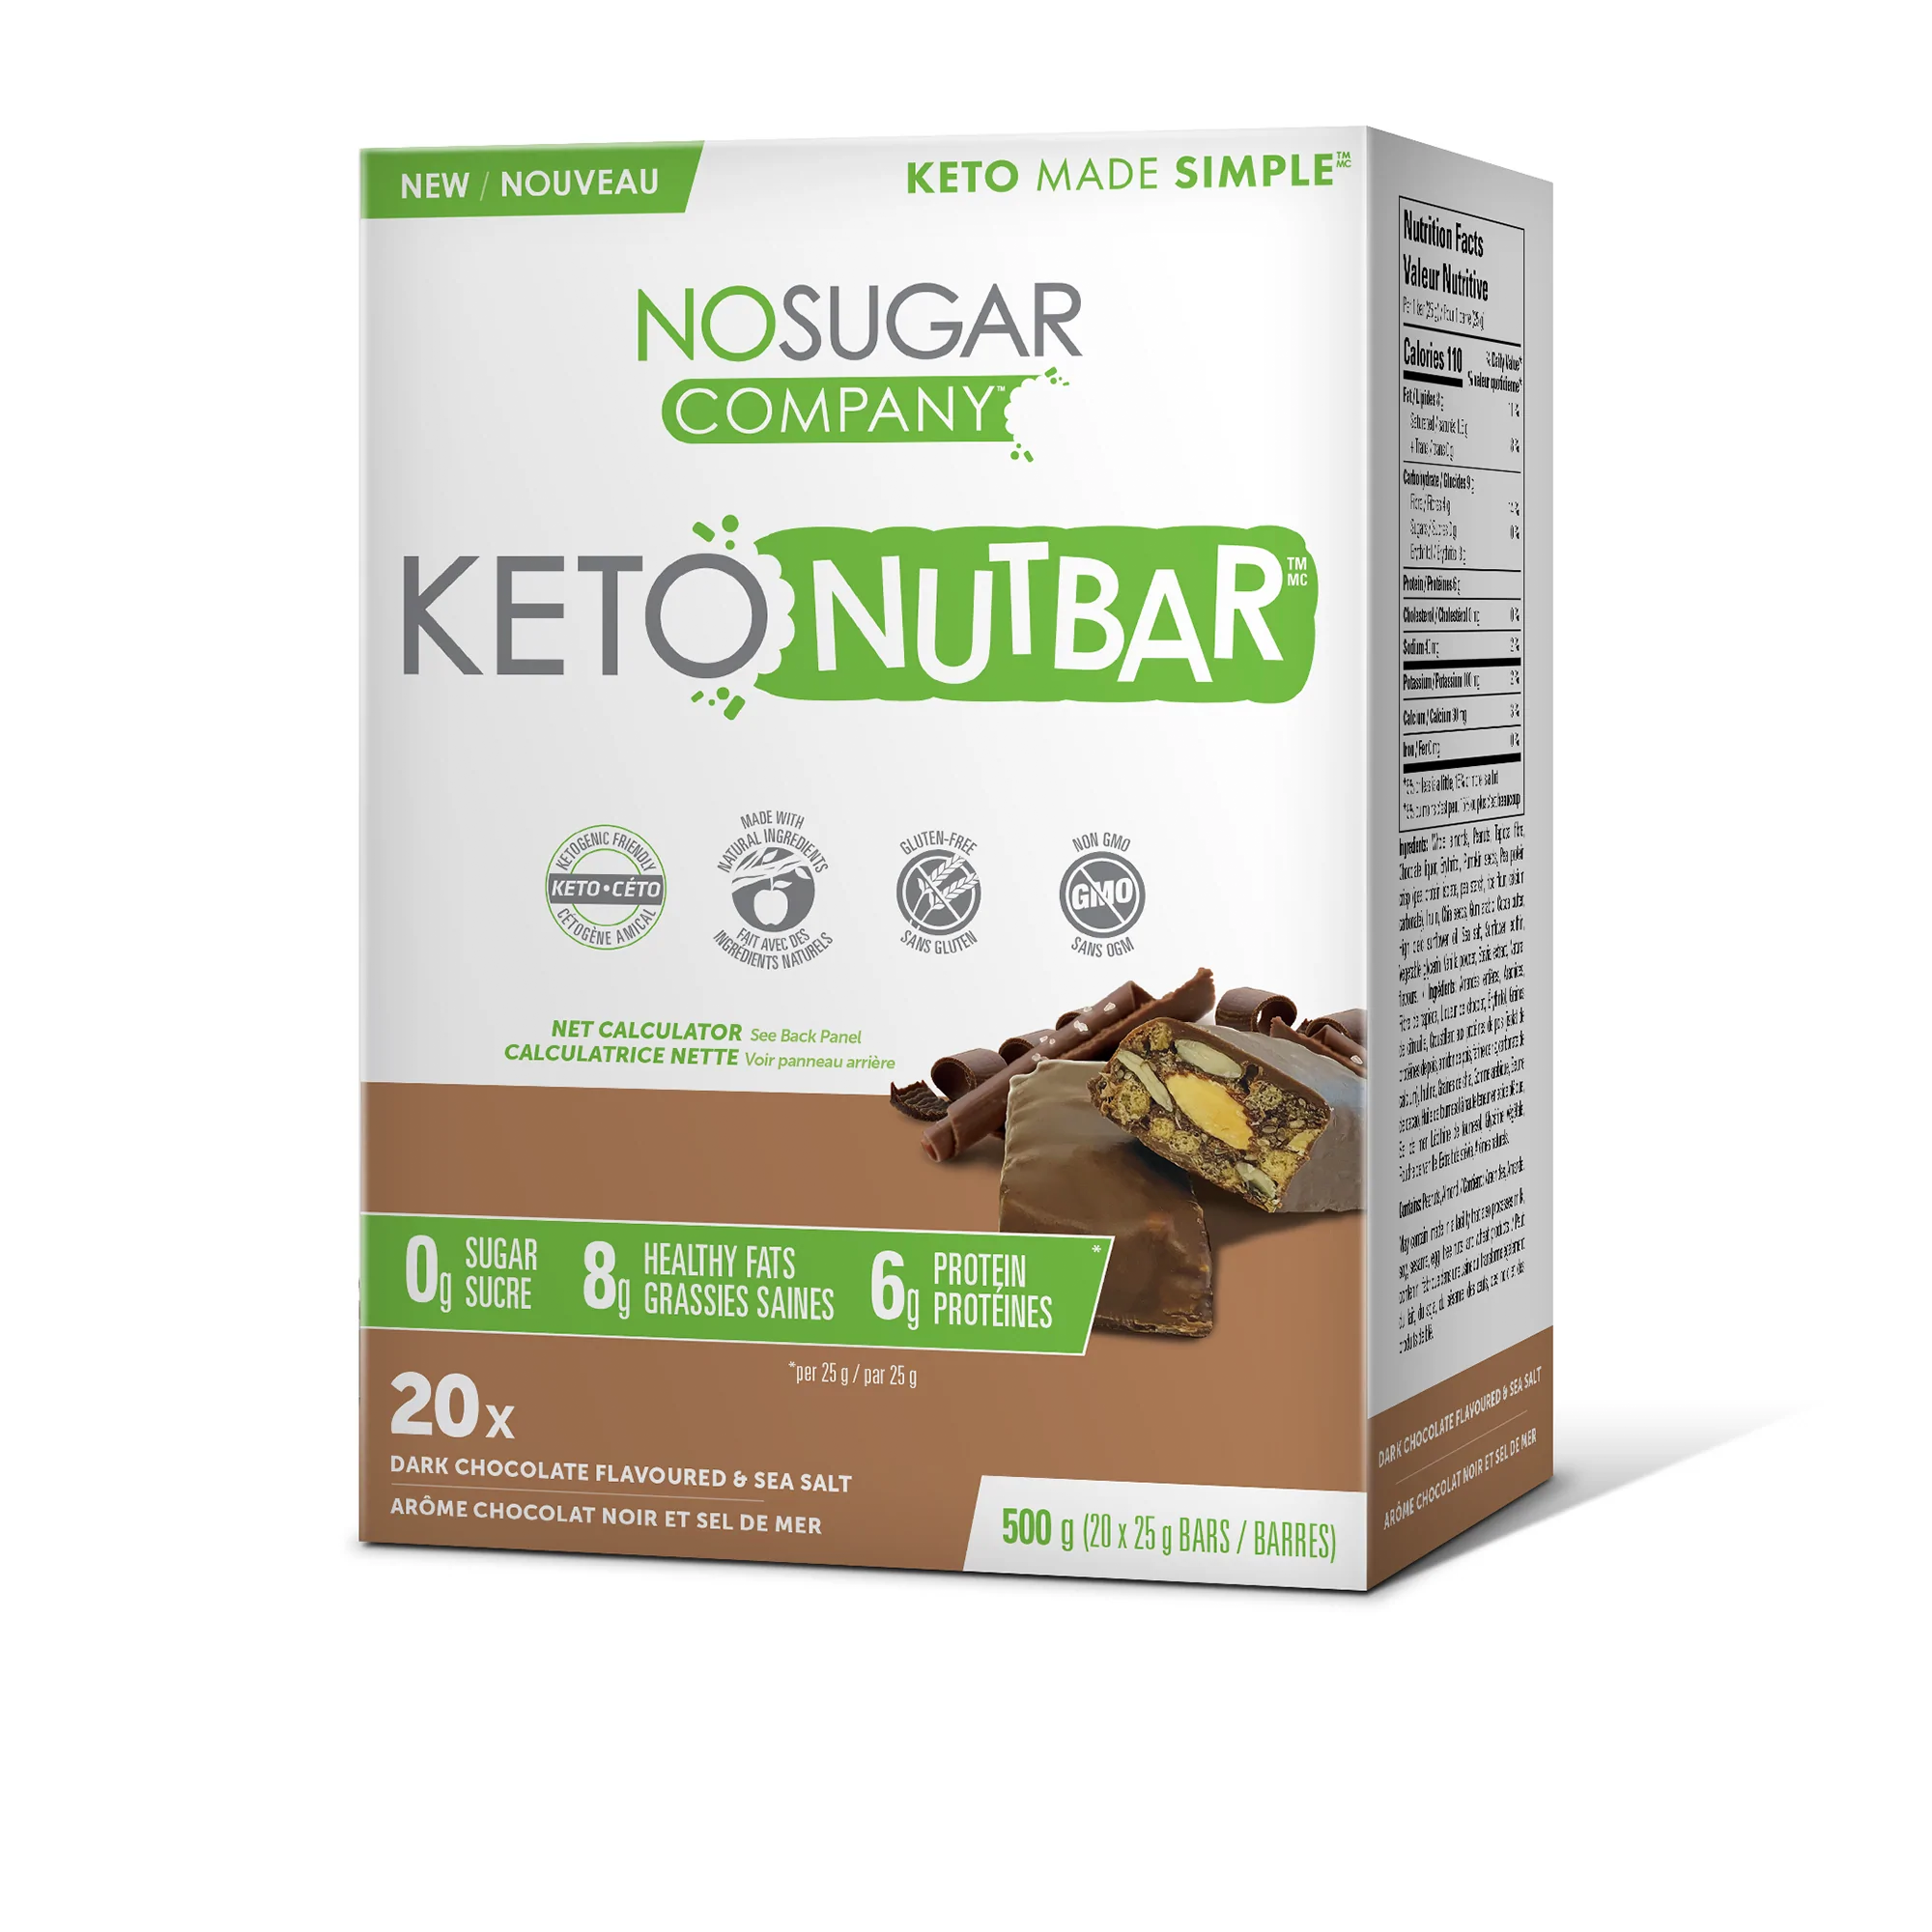 No Sugar Keto Nutbars Dark Chocolate and Sea Salt - 20 Nutbars, 25g (0.88oz) per Nutbar